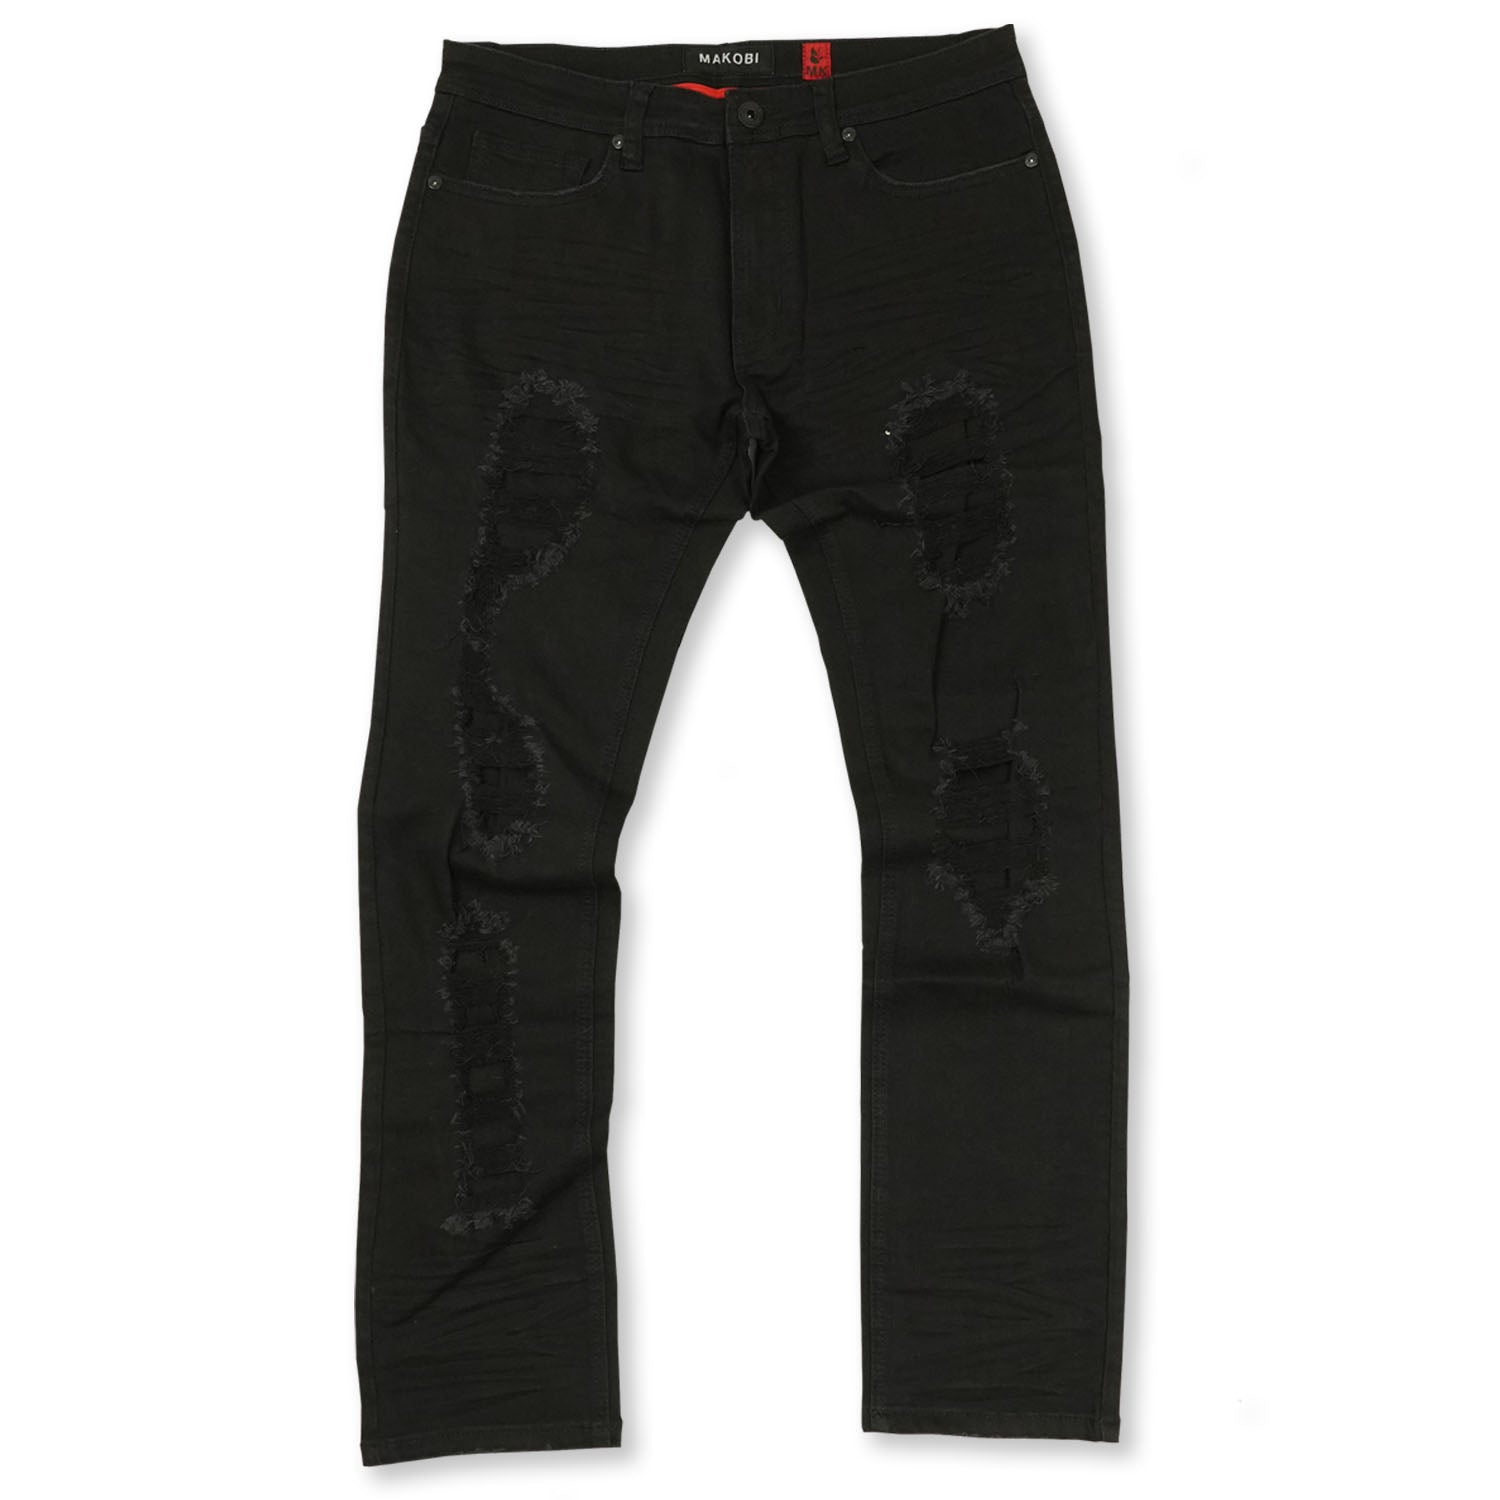 M1969 Bondi Shredded Jeans - Black Black